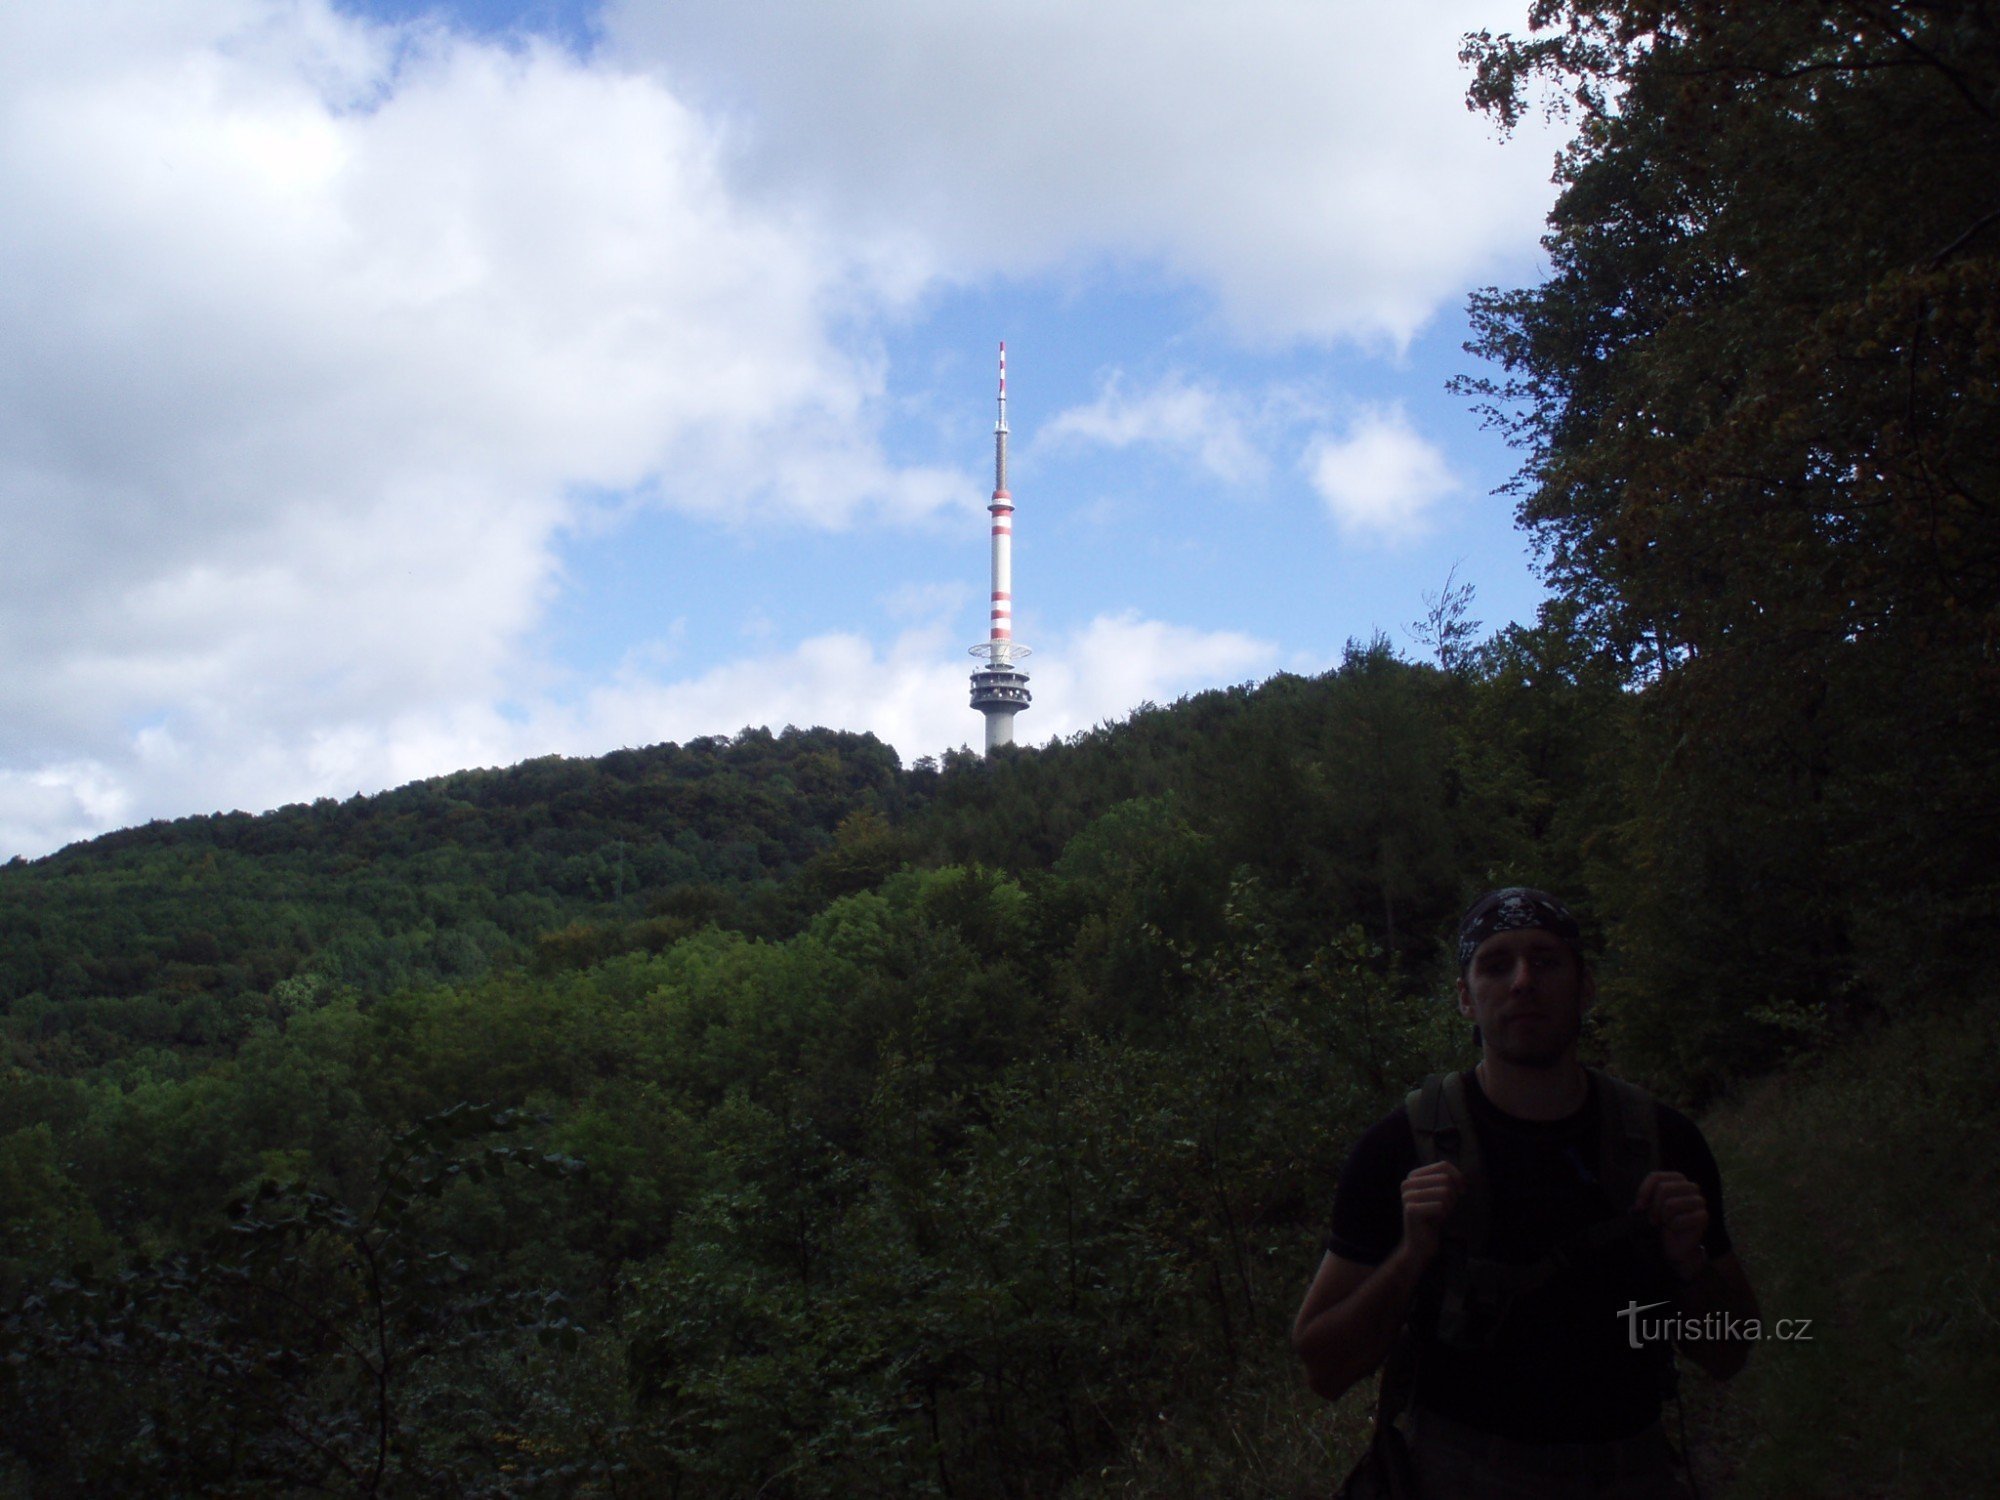 Beech mountain with a transmitter